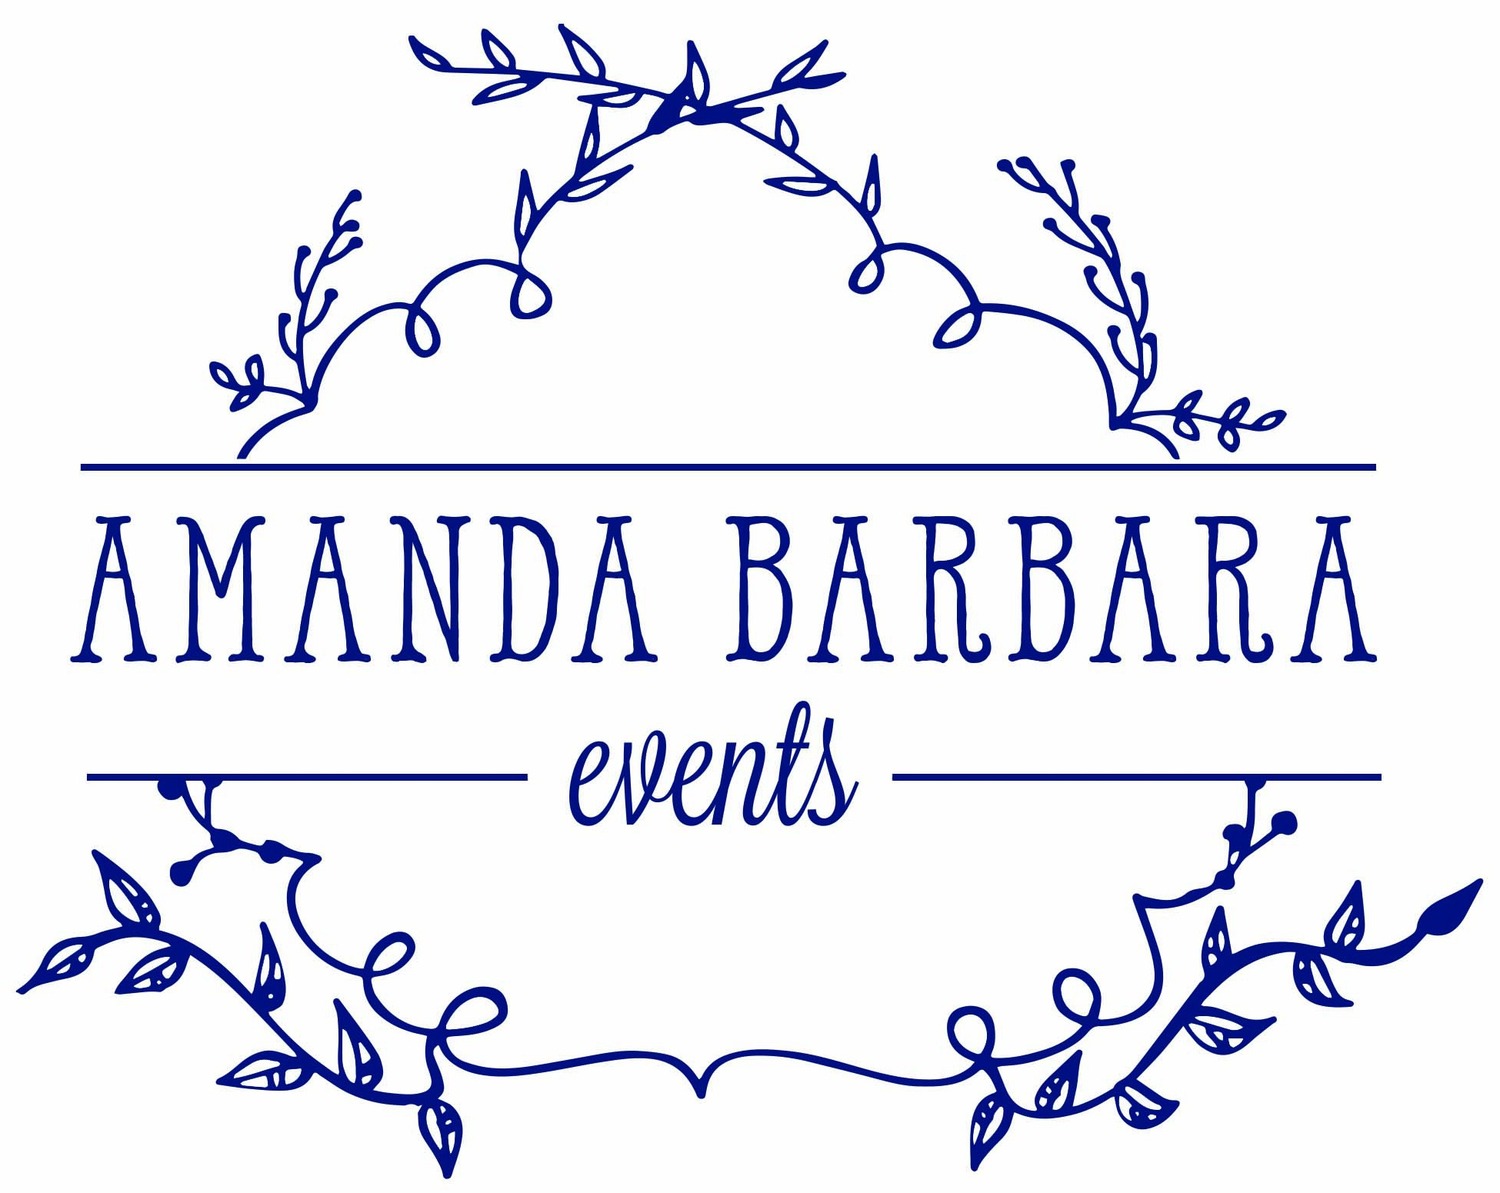 Amanda Barbara Events